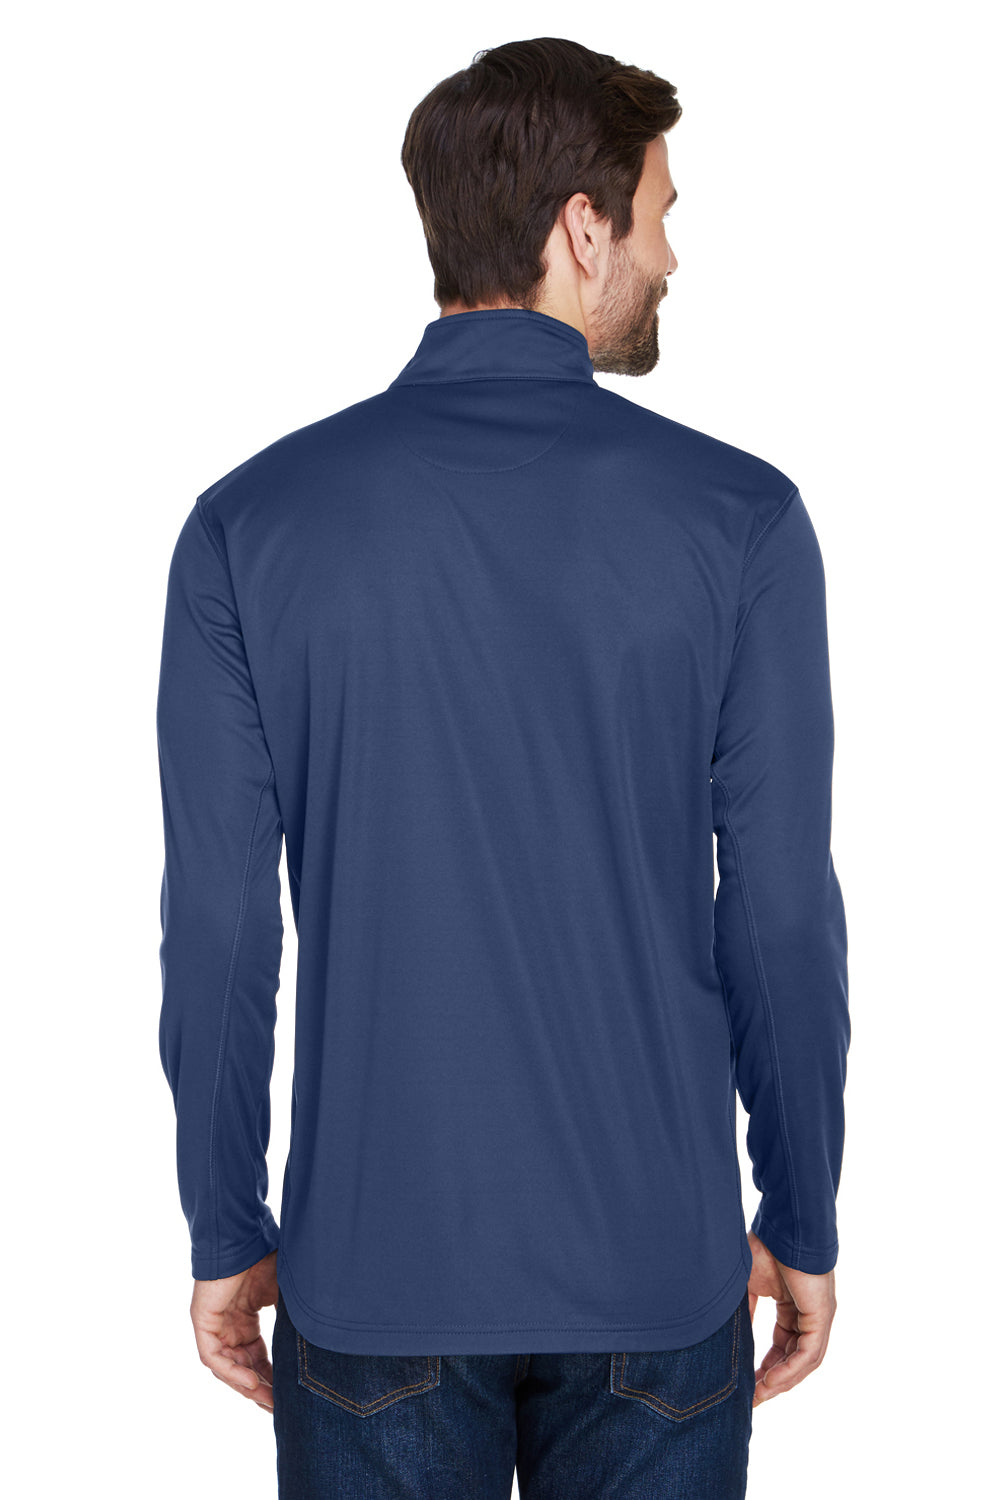 UltraClub 8230 Mens Cool & Dry Moisture Wicking 1/4 Zip Sweatshirt Navy Blue Back